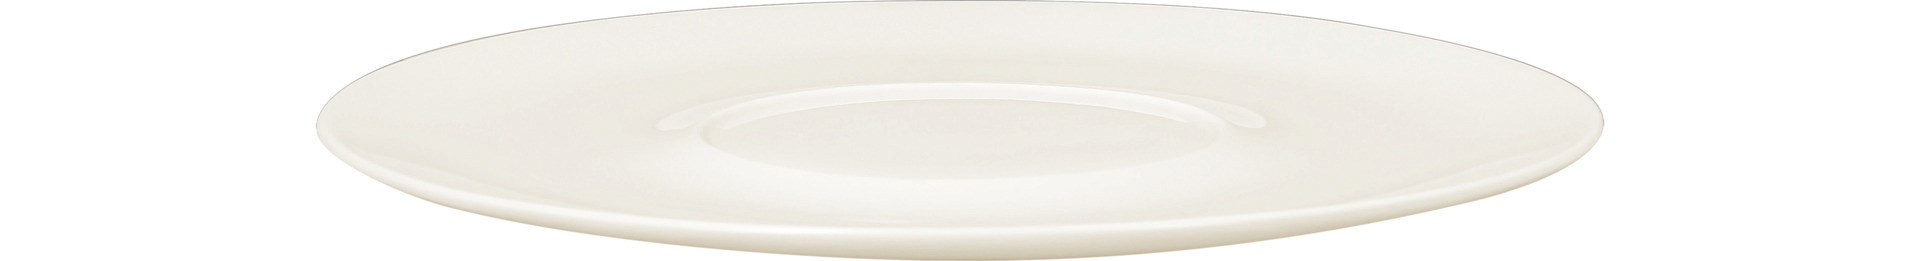 Teller flach rund appeal 300 mm plain-white